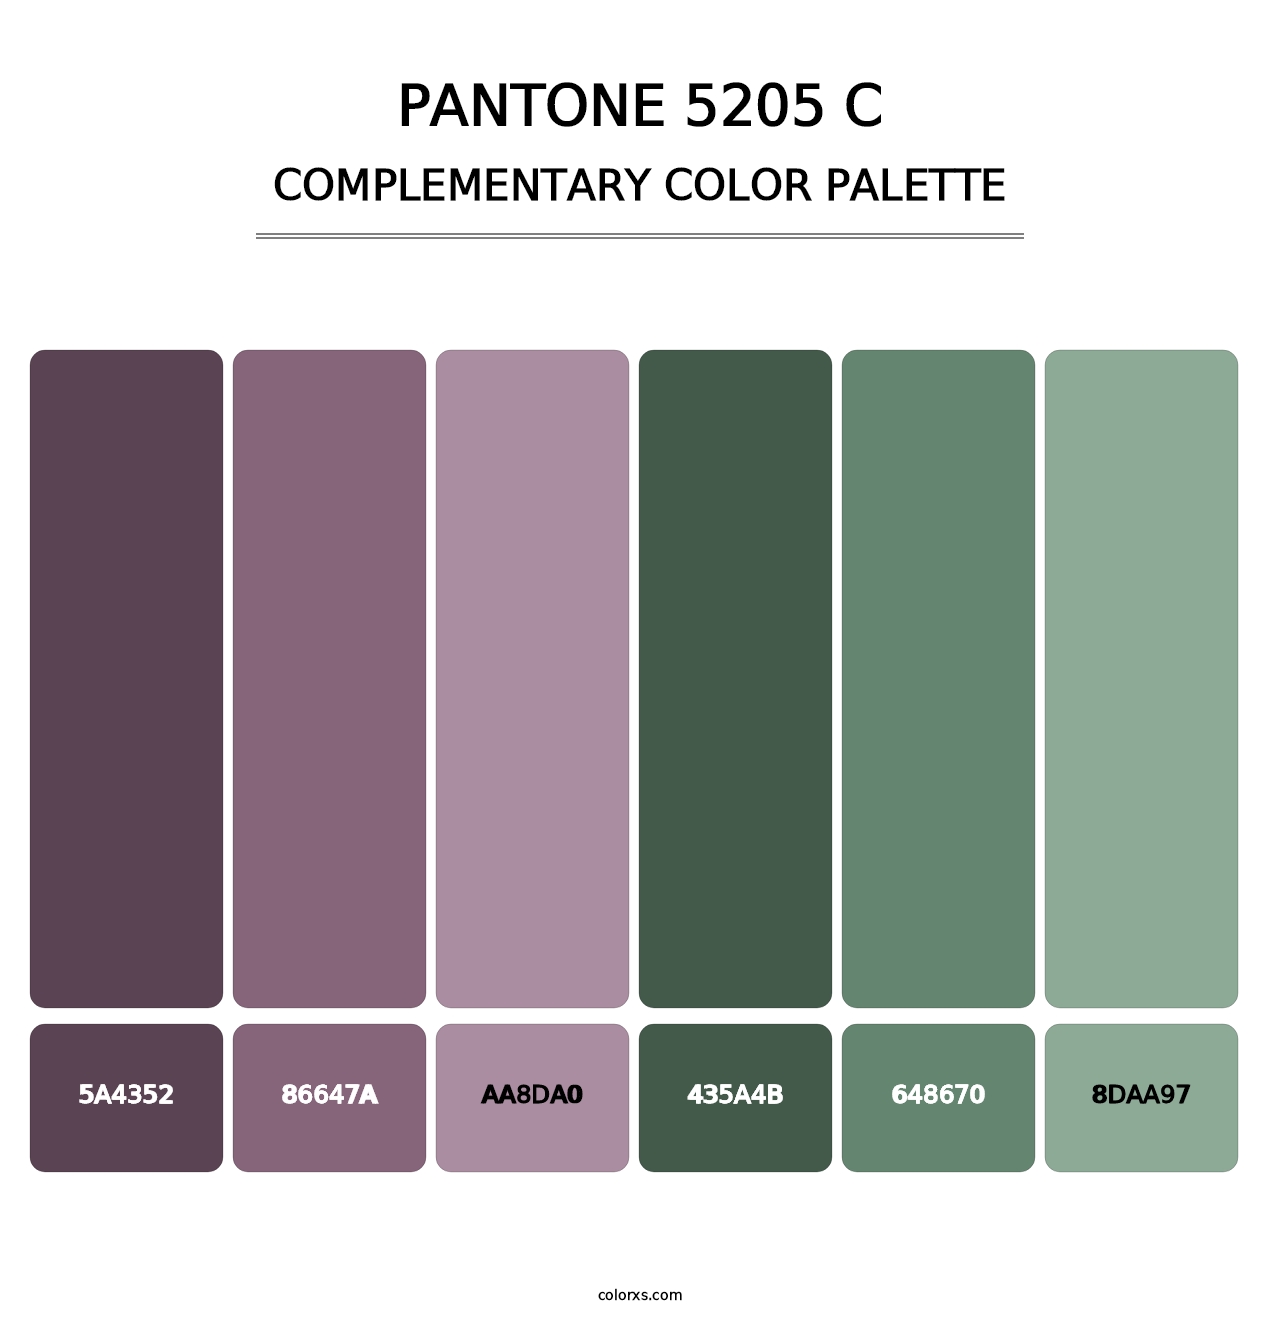 PANTONE 5205 C - Complementary Color Palette